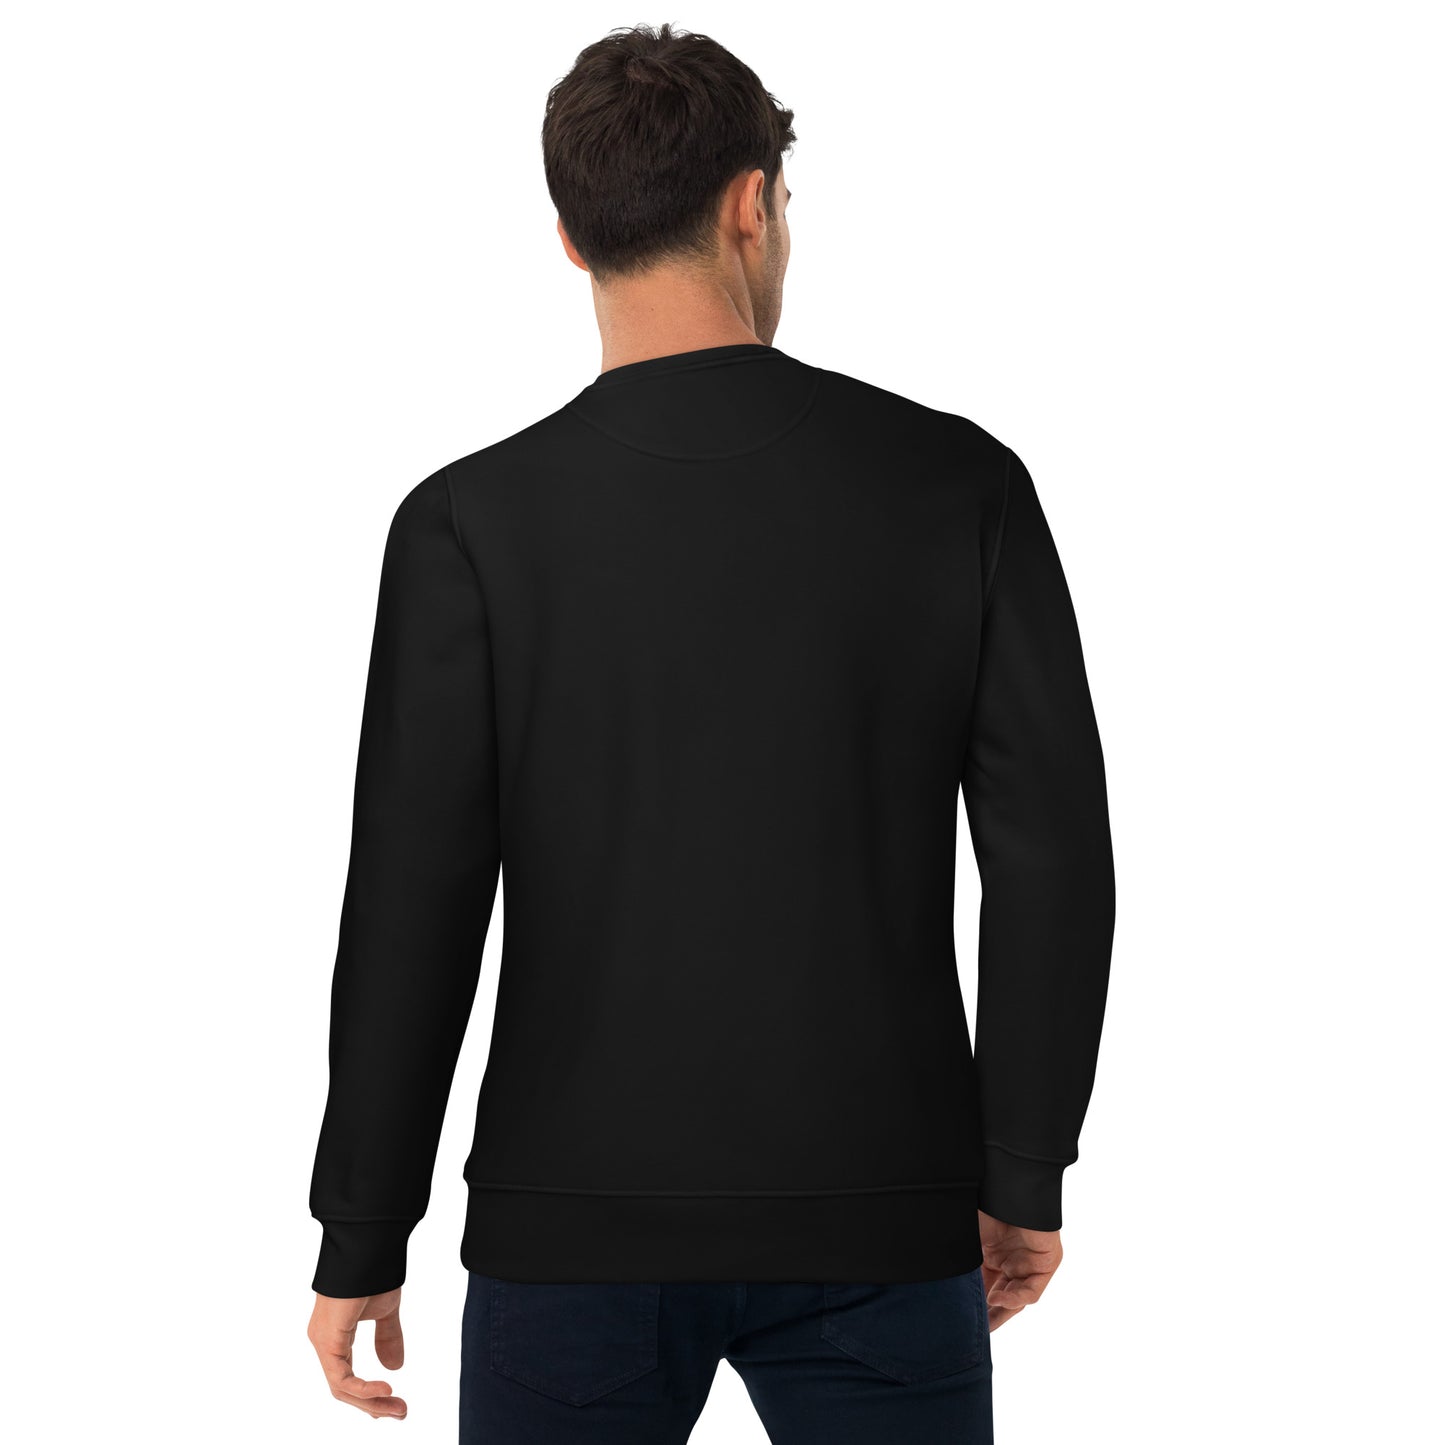 Menkrav Initiate sweatshirt black